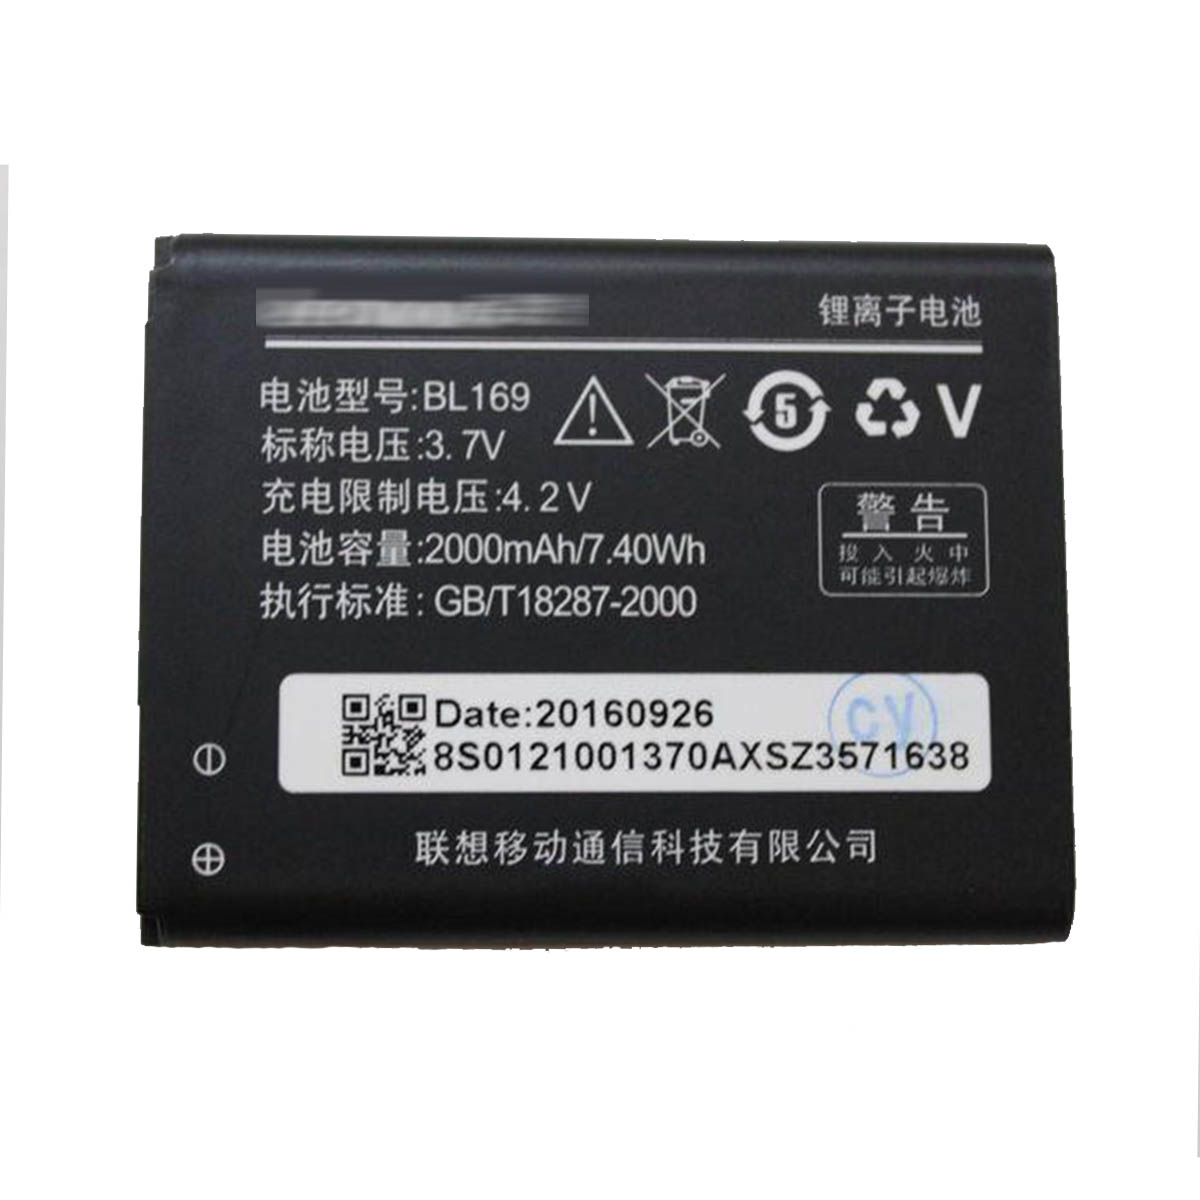 АКБ (Аккумулятор) BL169 для Lenovo A789, P70, S560, P800 2000мАч.